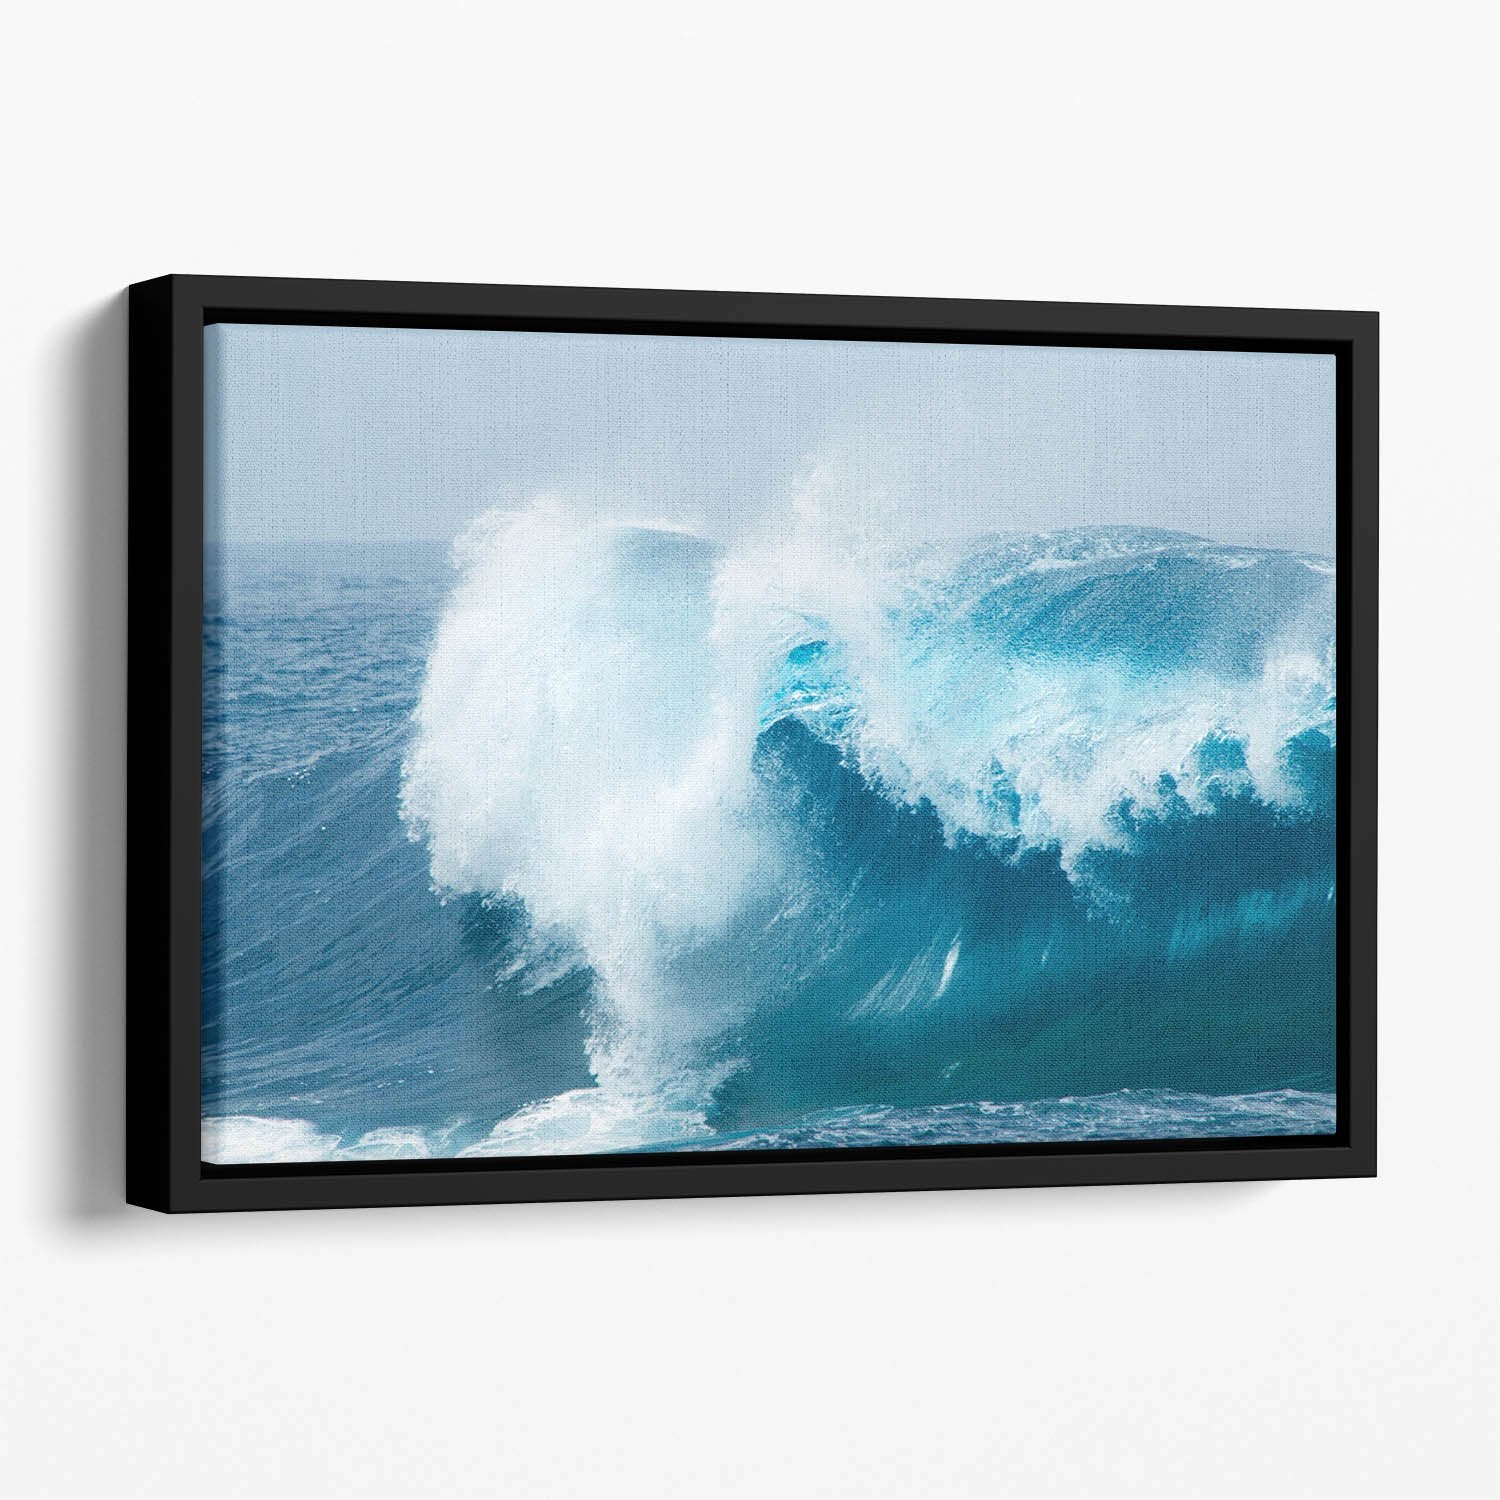 Ocean waves breaking natural Floating Framed Canvas